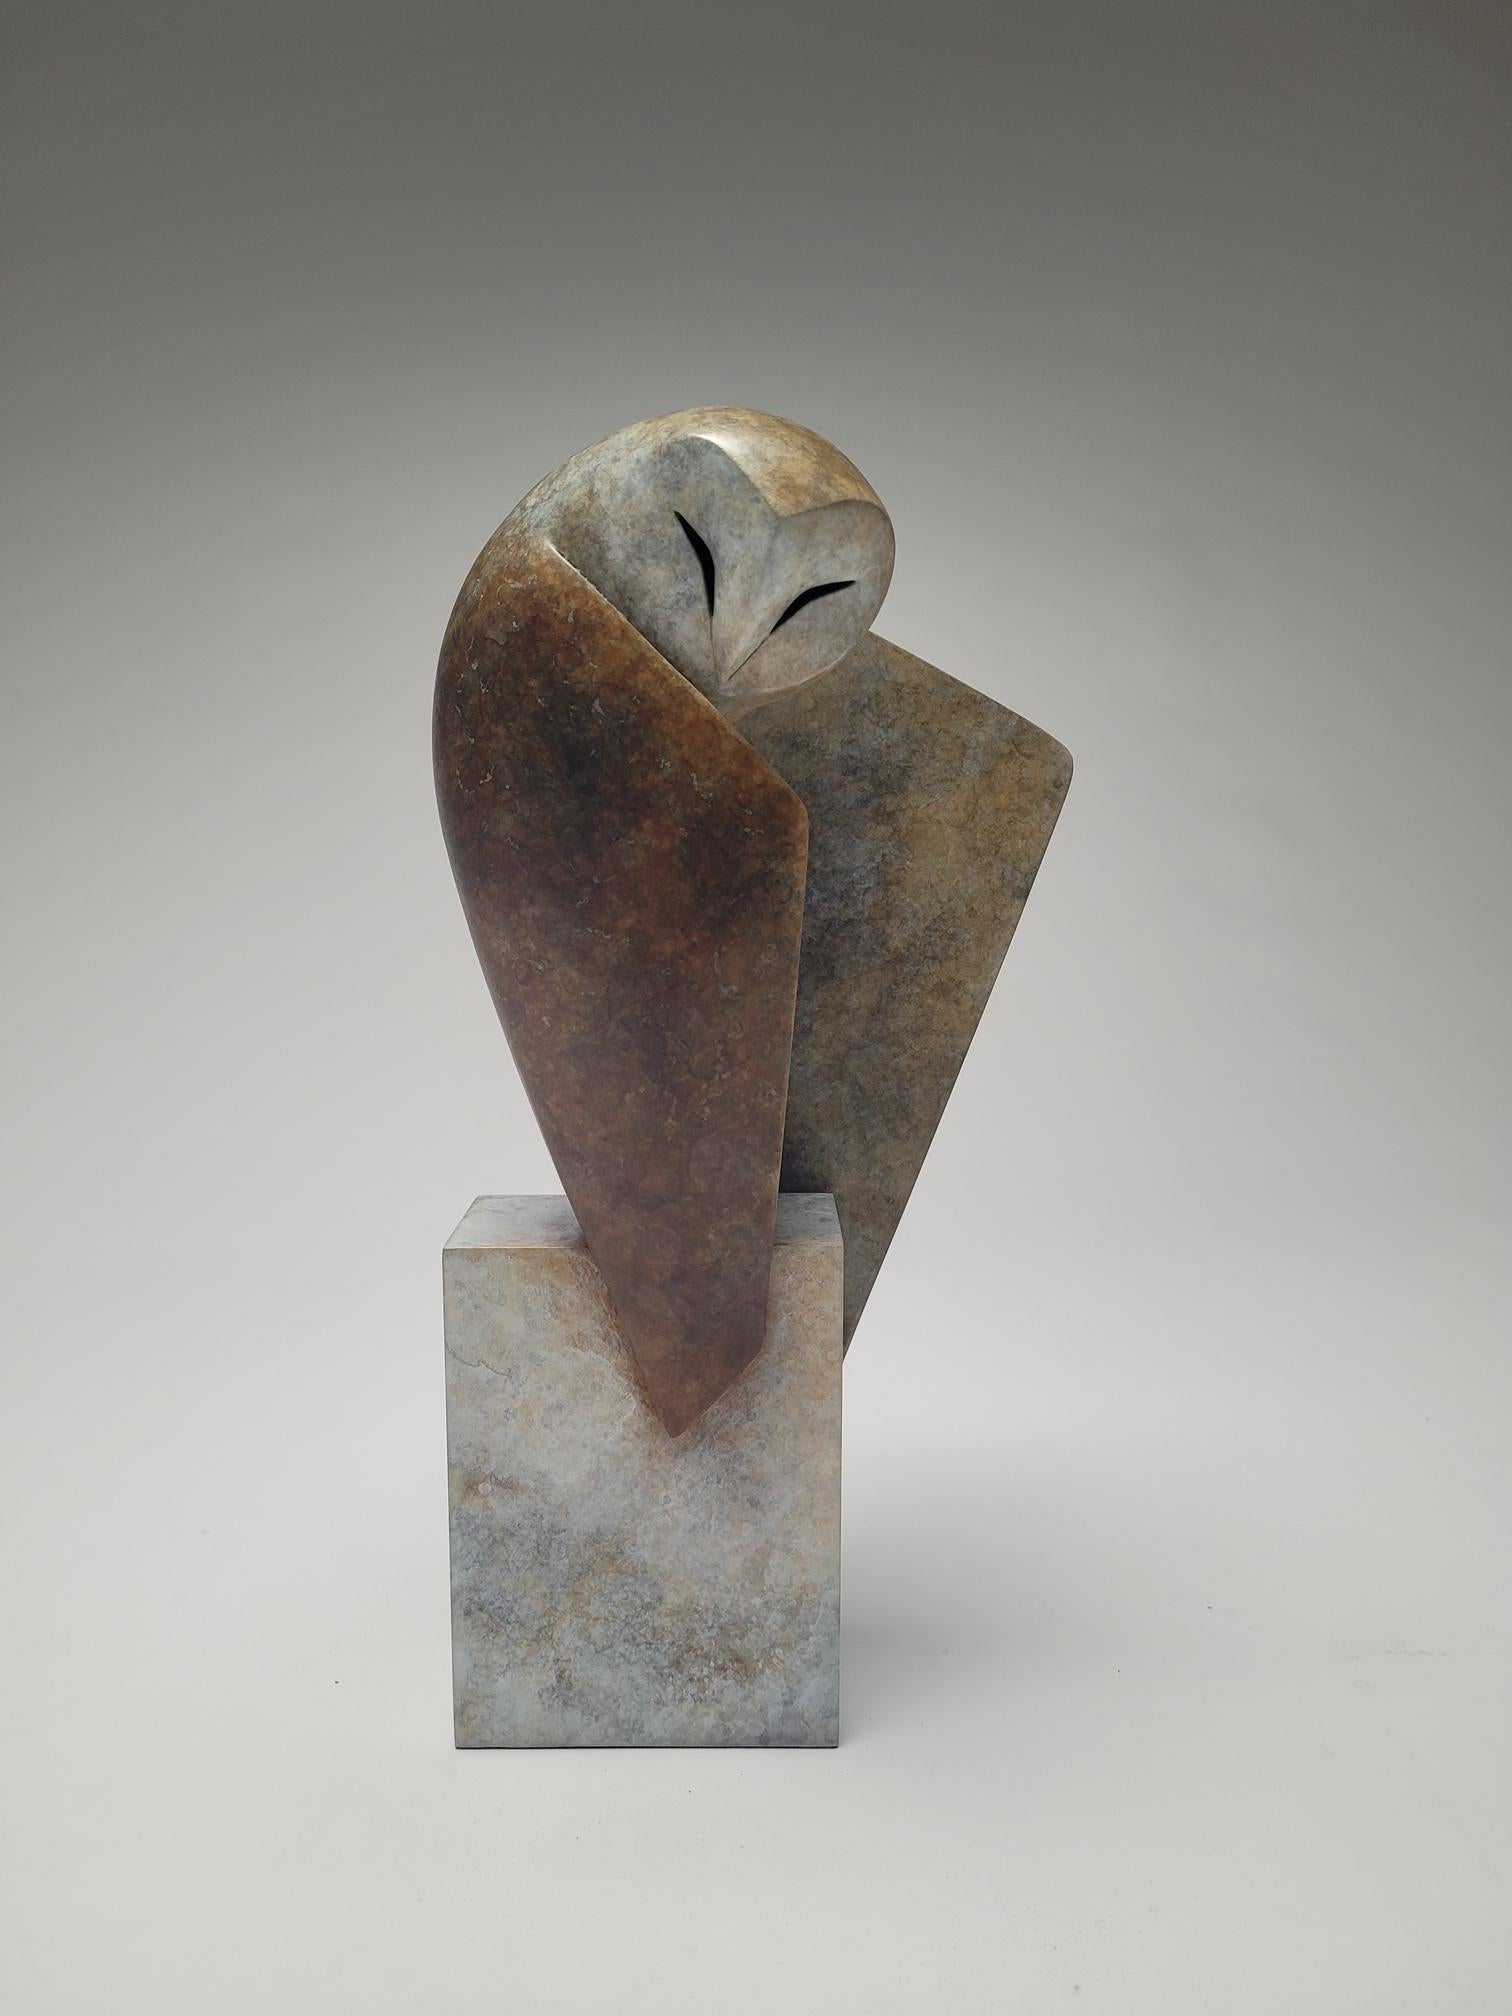 Anthony Theakston Figurative Sculpture - "Bastion 3" Contemporary Bronze Sculpture Portrait of an Owl, Bird